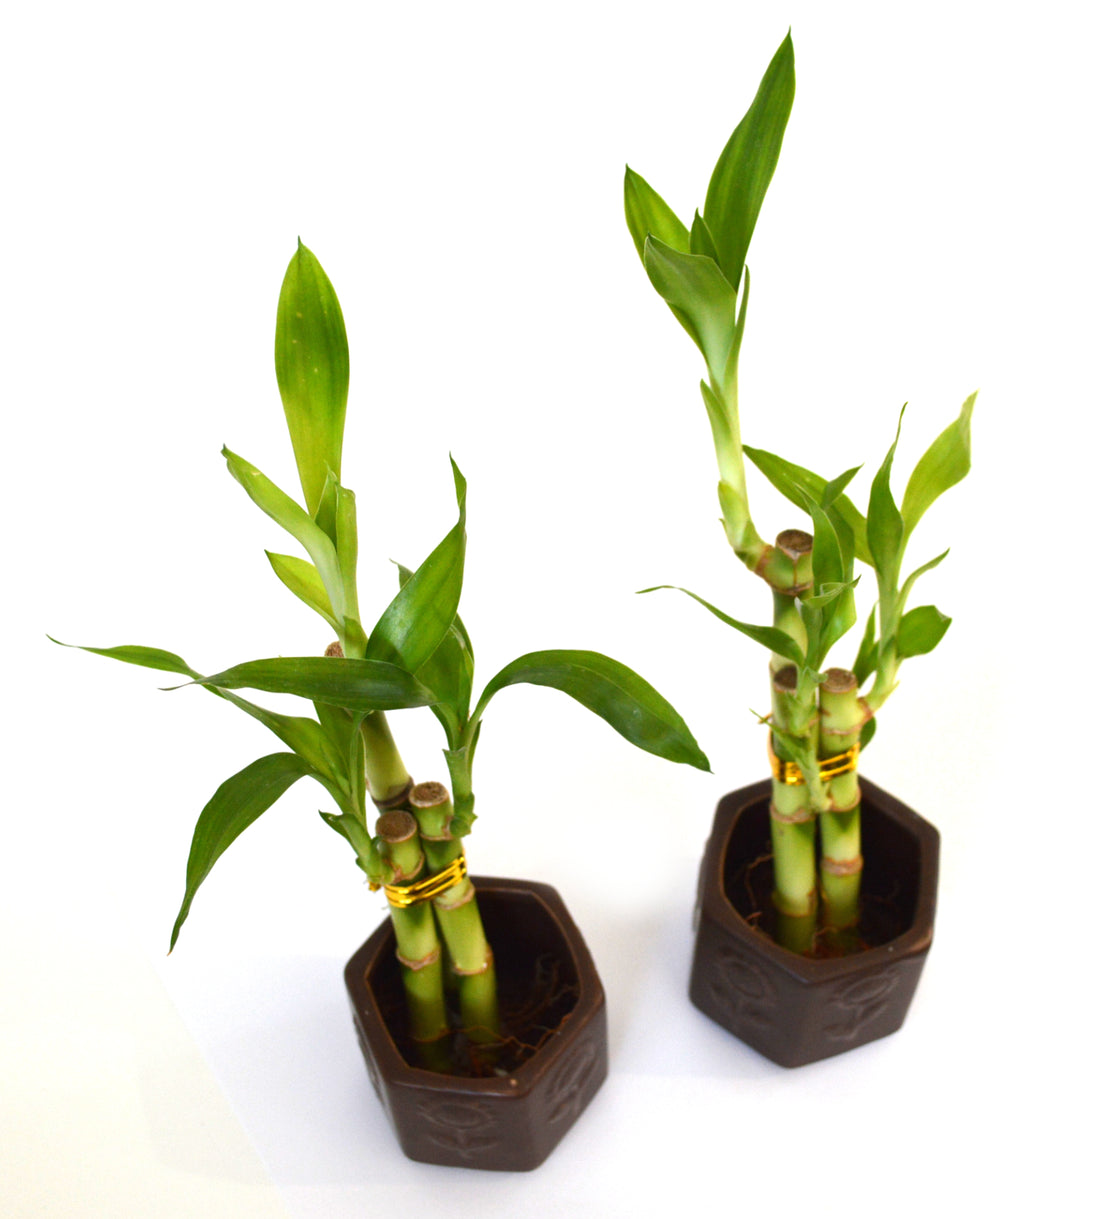 9GreenBox - Live 3 Style Party Set of 2 Bamboo Plant Arrangement w/ Ceramic Vase - 9GreenBox